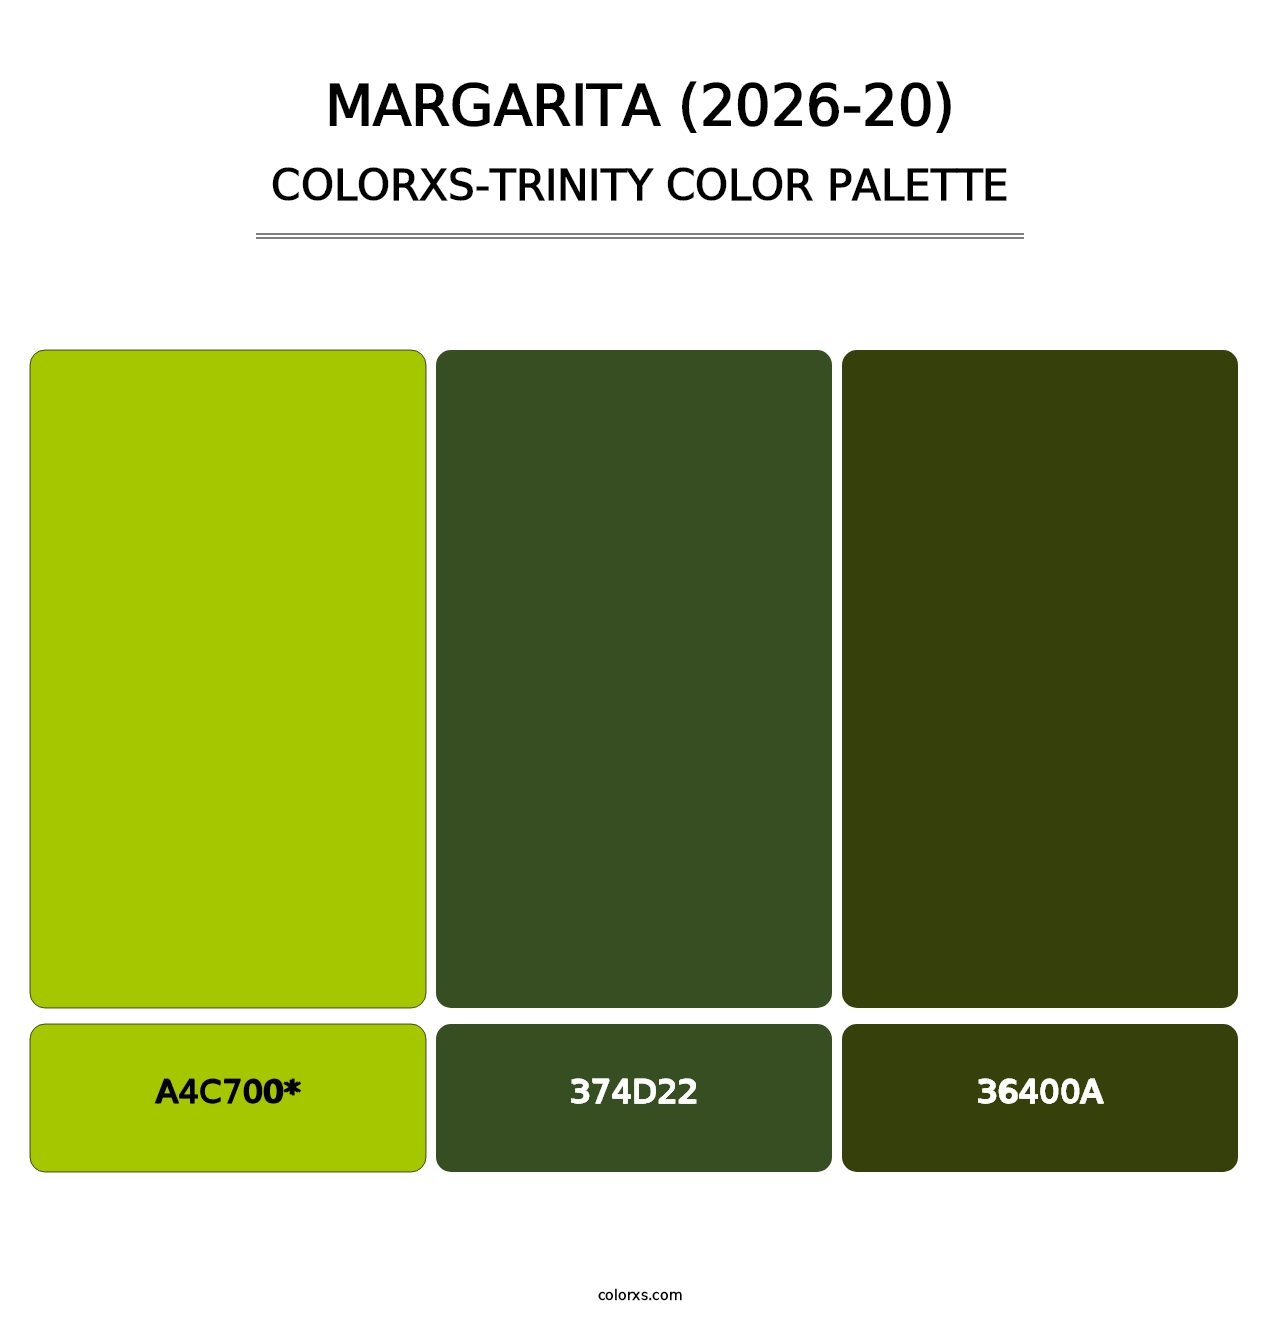 Margarita (2026-20) - Colorxs Trinity Palette